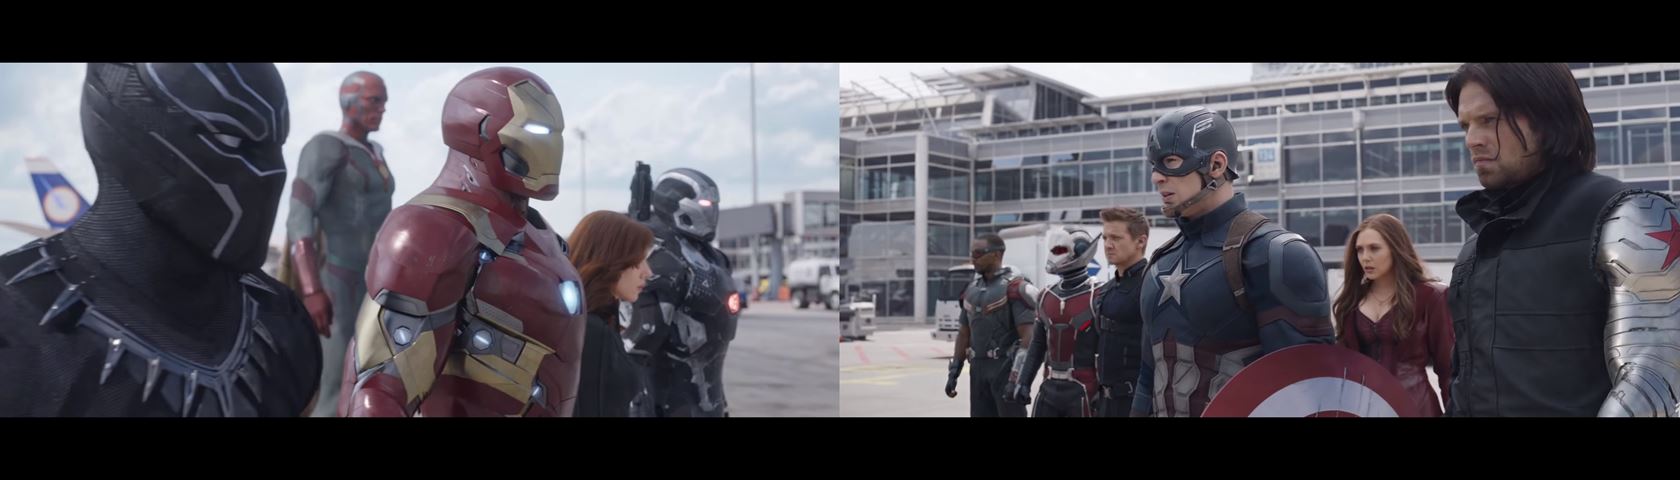 Civil War - Team Cap Vs Team Iron Man Spiderman - HD Wallpaper 